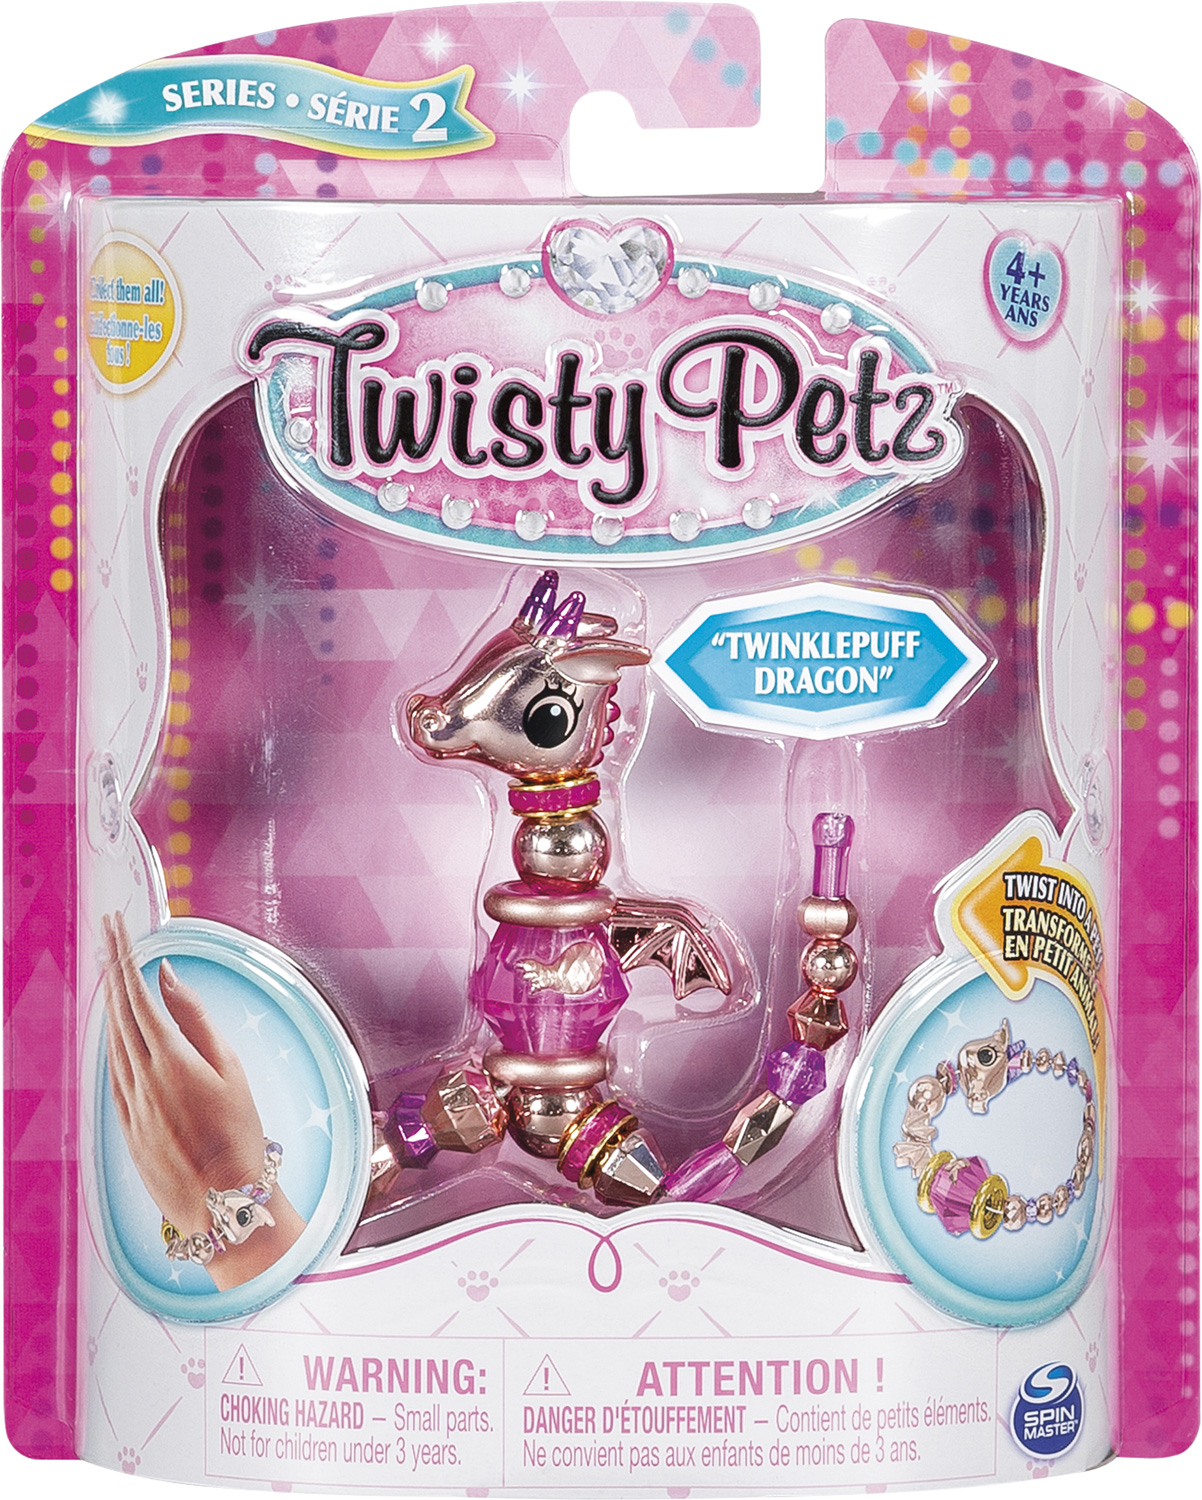 Twisty Petz Petals Poodle Series 1 Twist Pet New in Package 